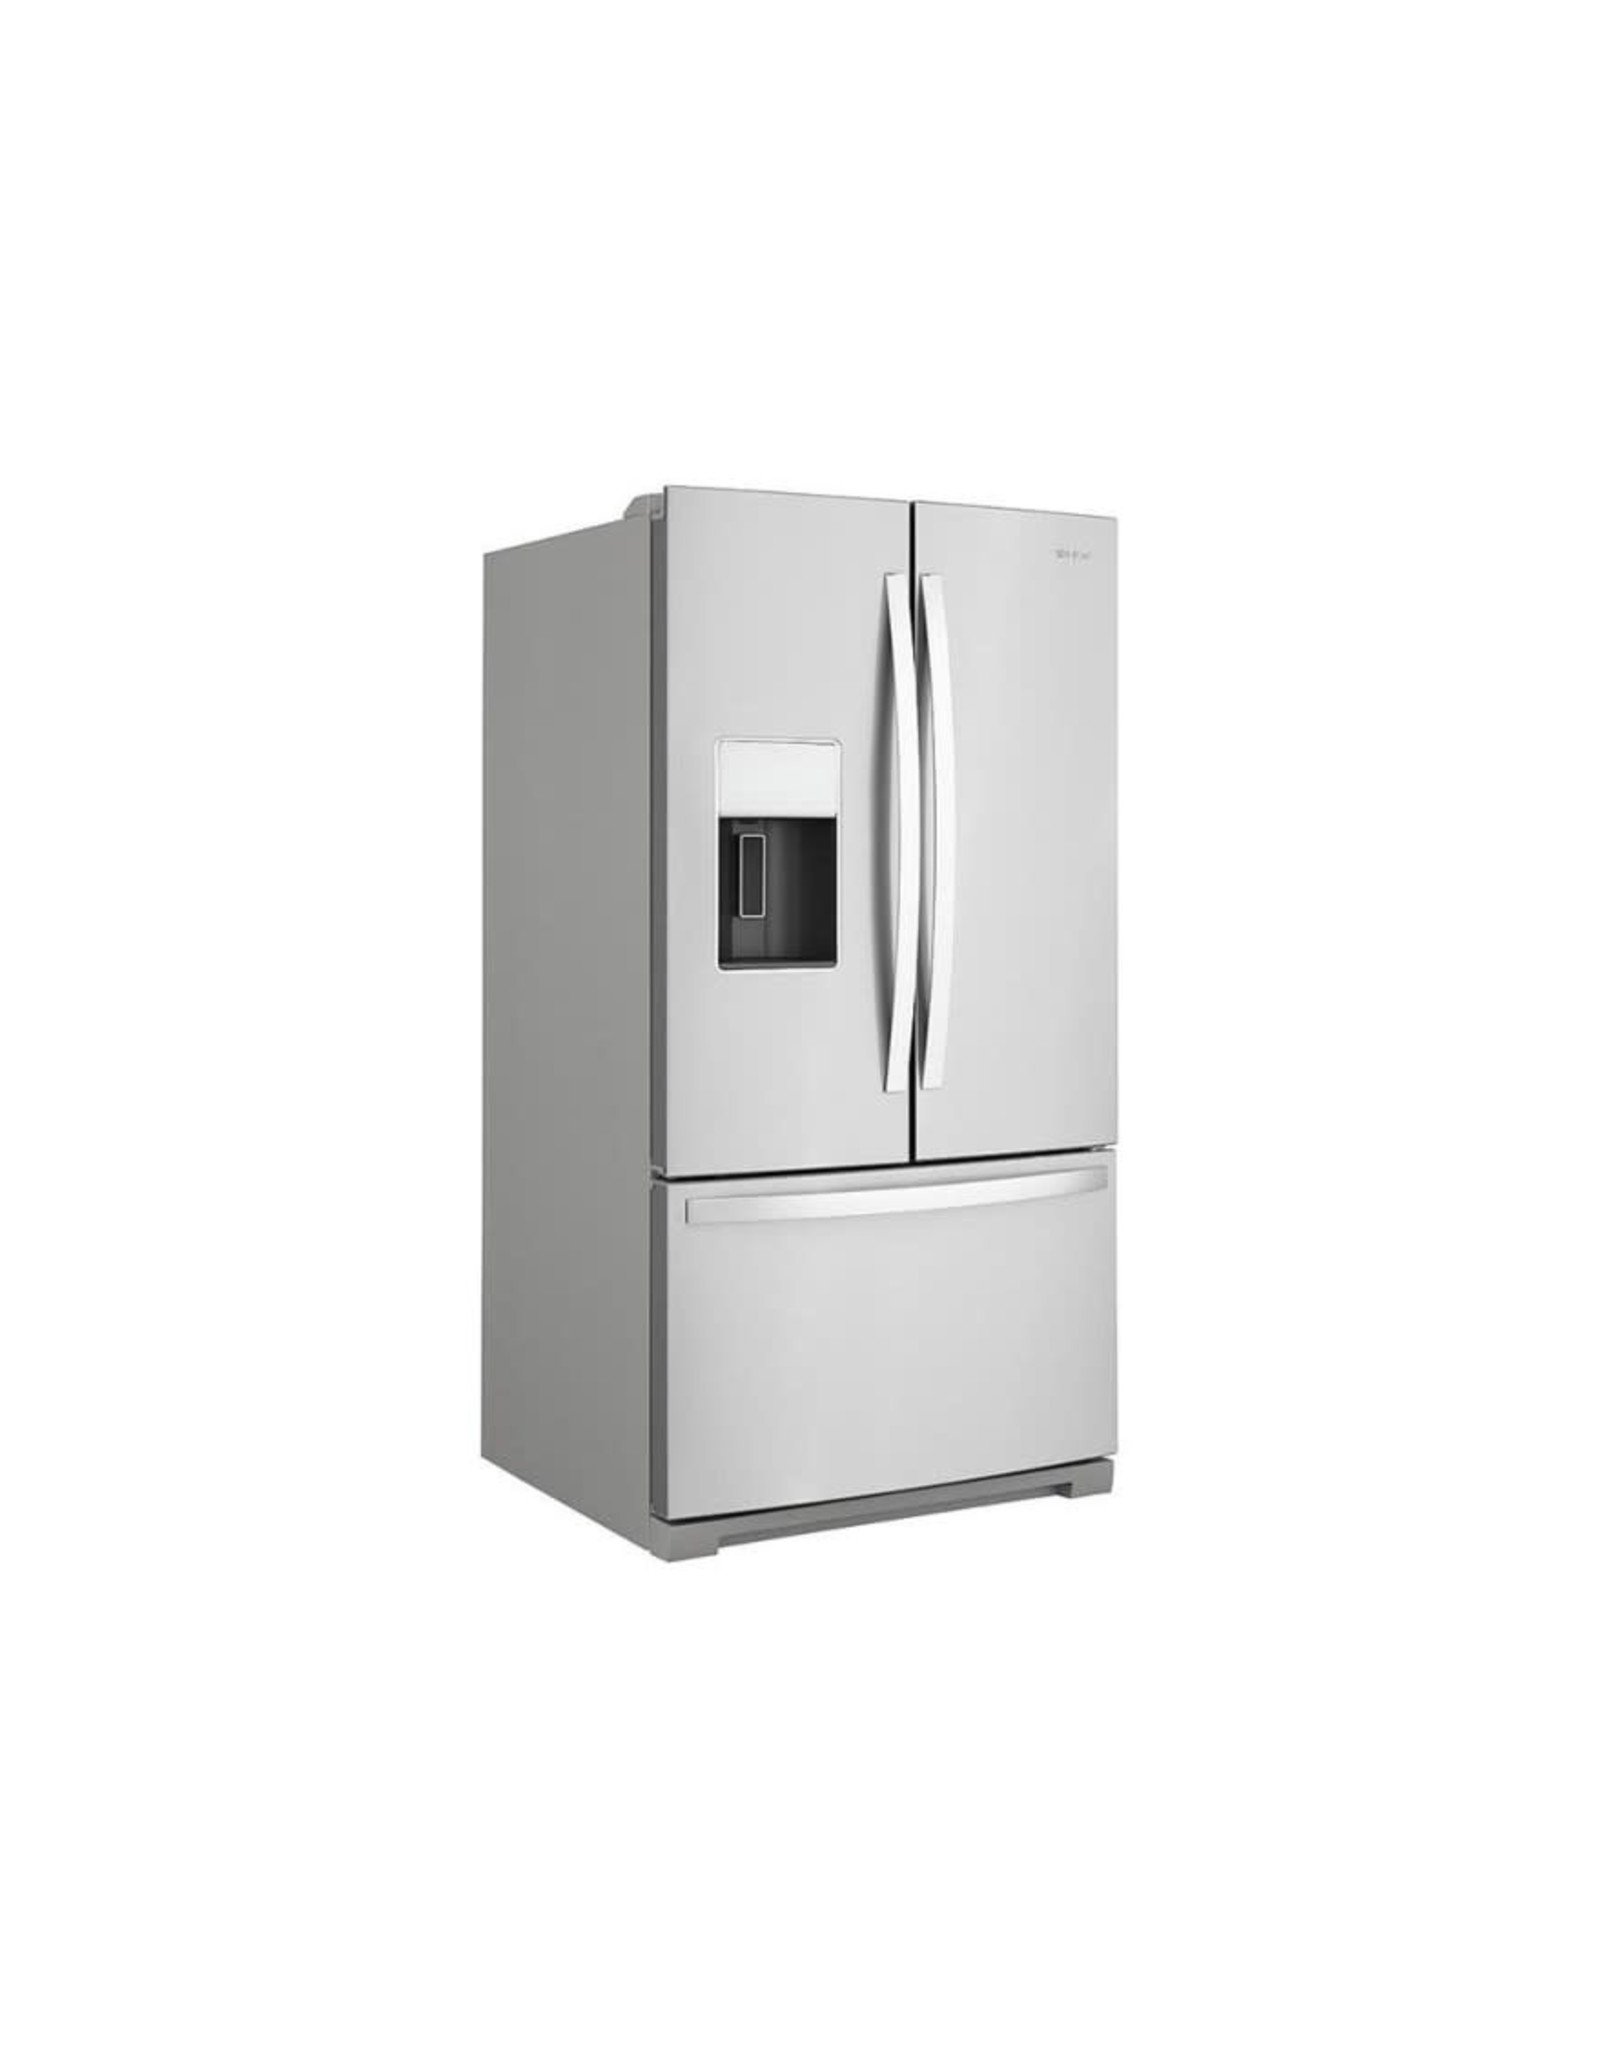 WHIRLPOOL WRF767SDHZ 27 cu. ft. French Door Refrigerator in Fingerprint Resistant Stainless Steel